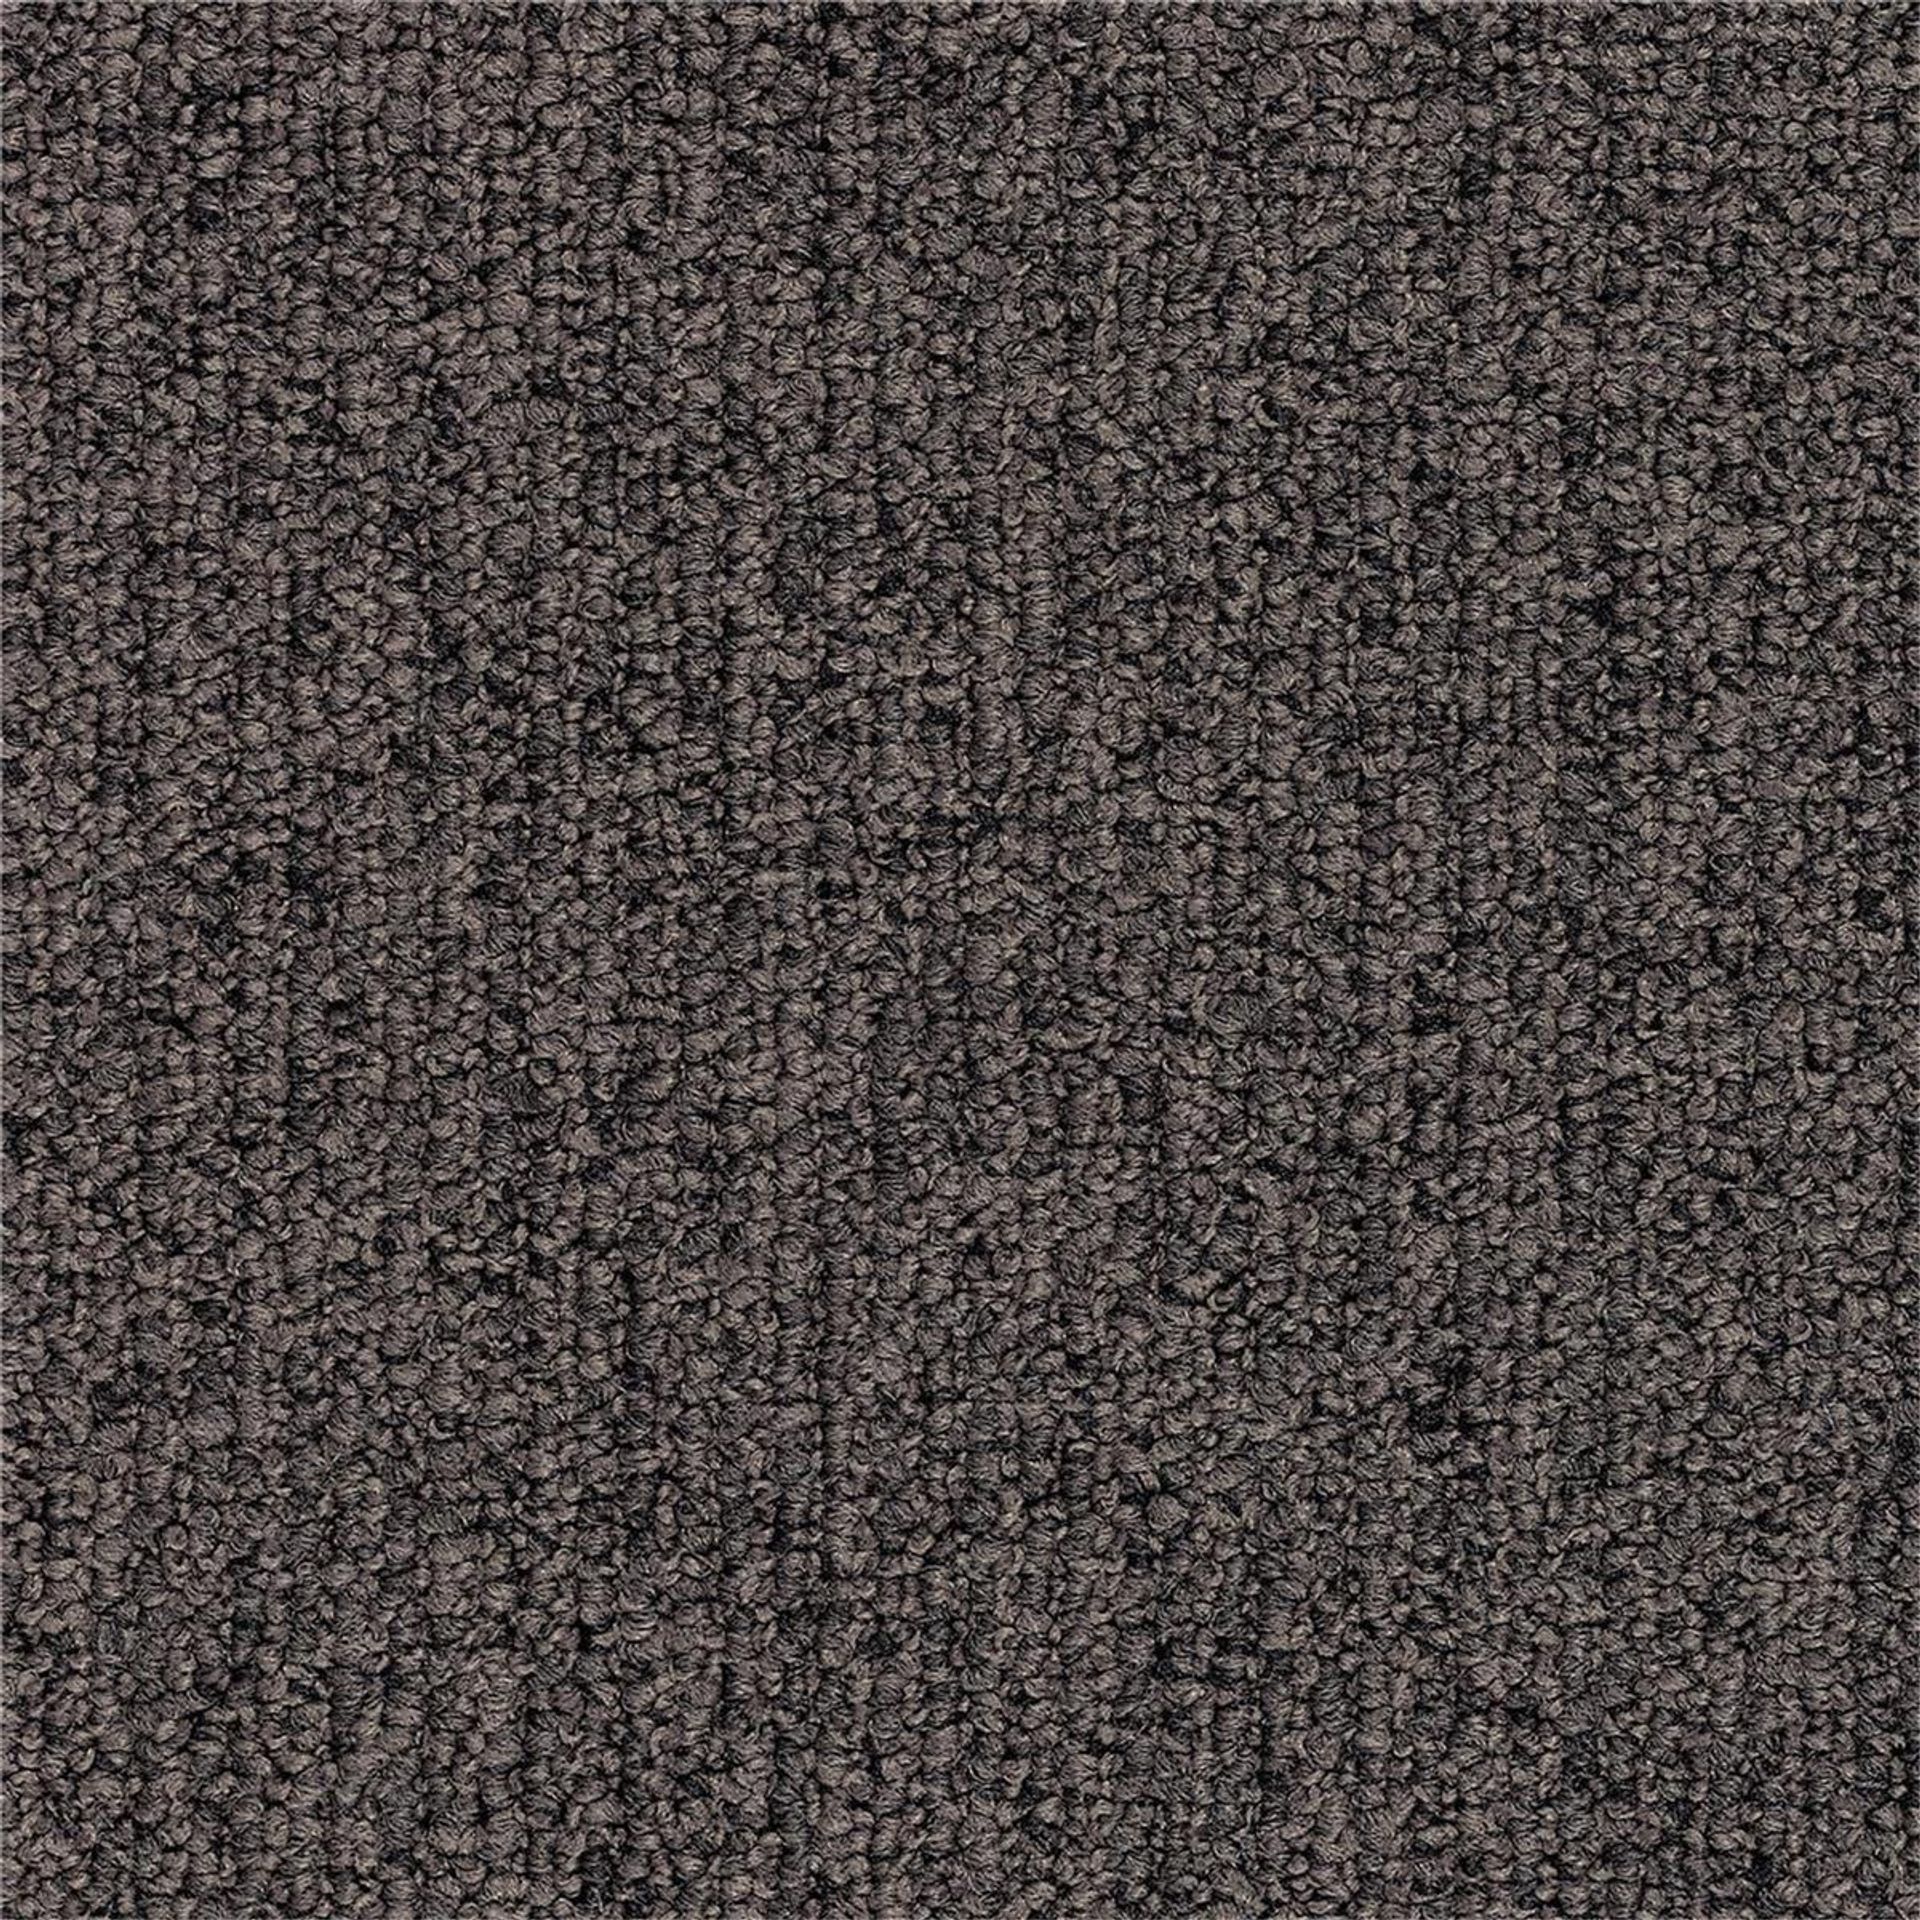 Teppichfliesen 50 x 50 cm Schlinge strukturiert Reclaim Ribs A819 9094 Braun Linear